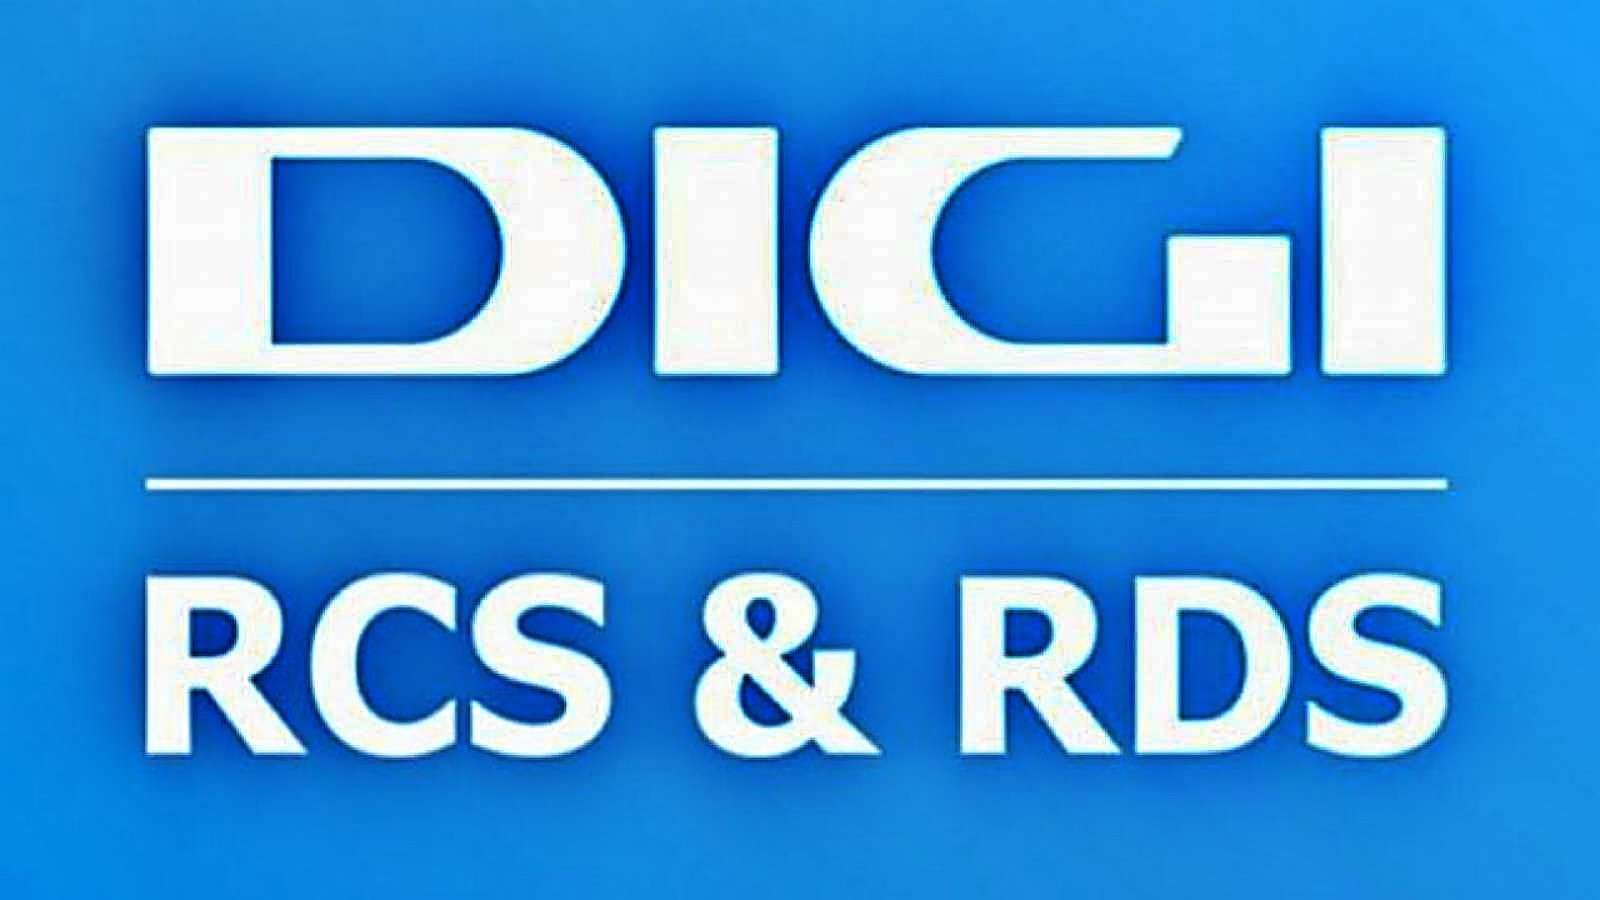 DIGI RCS & RDS Ofera GRATUIT Multi Clienti Toata Romania